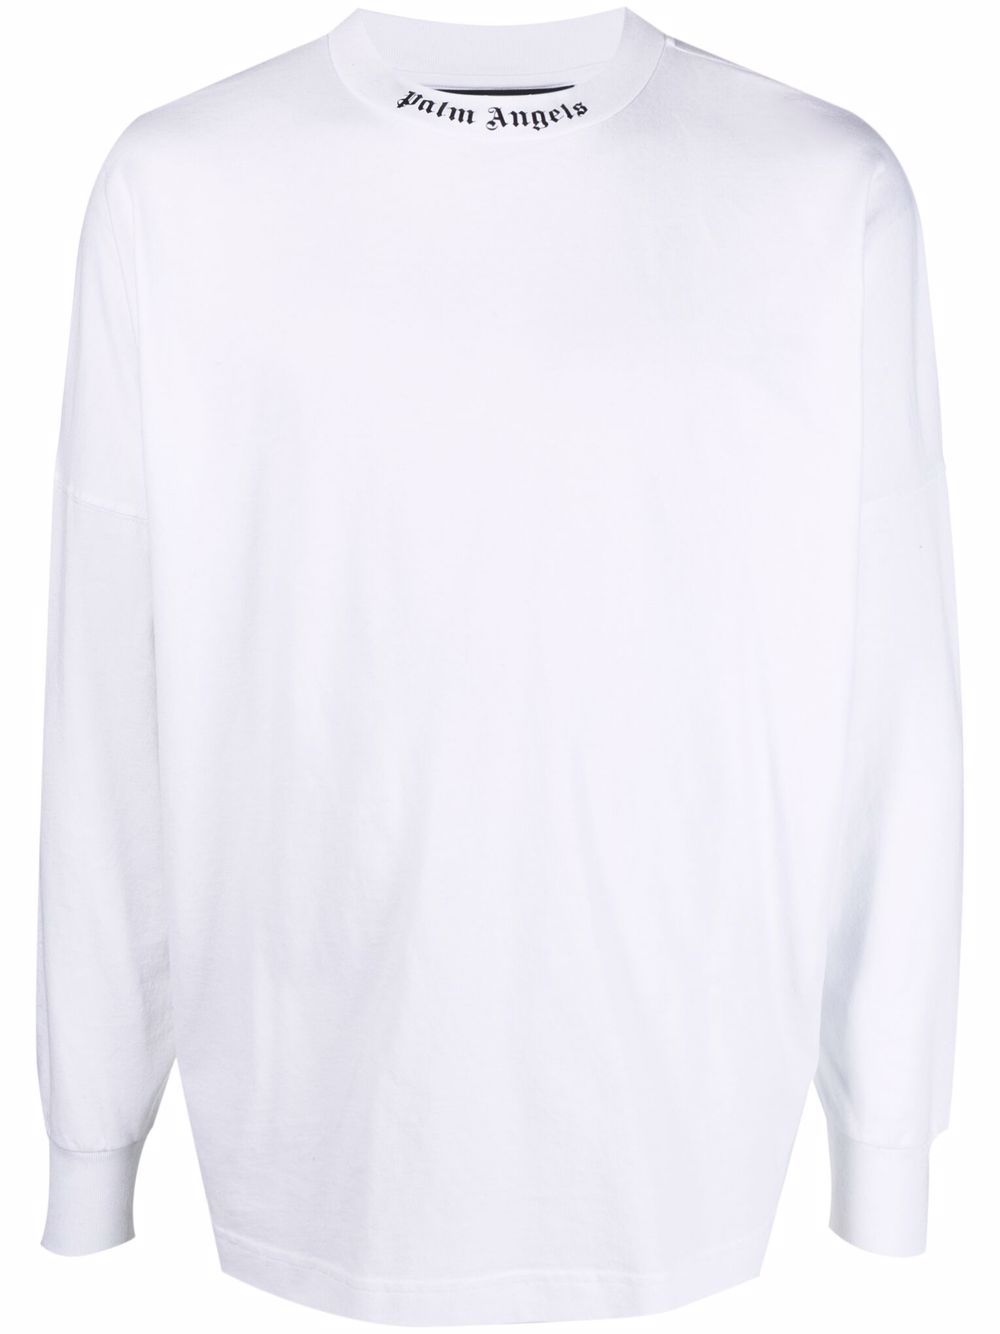 PALM ANGELS logo-print long-sleeve T-shirt - Farfetch